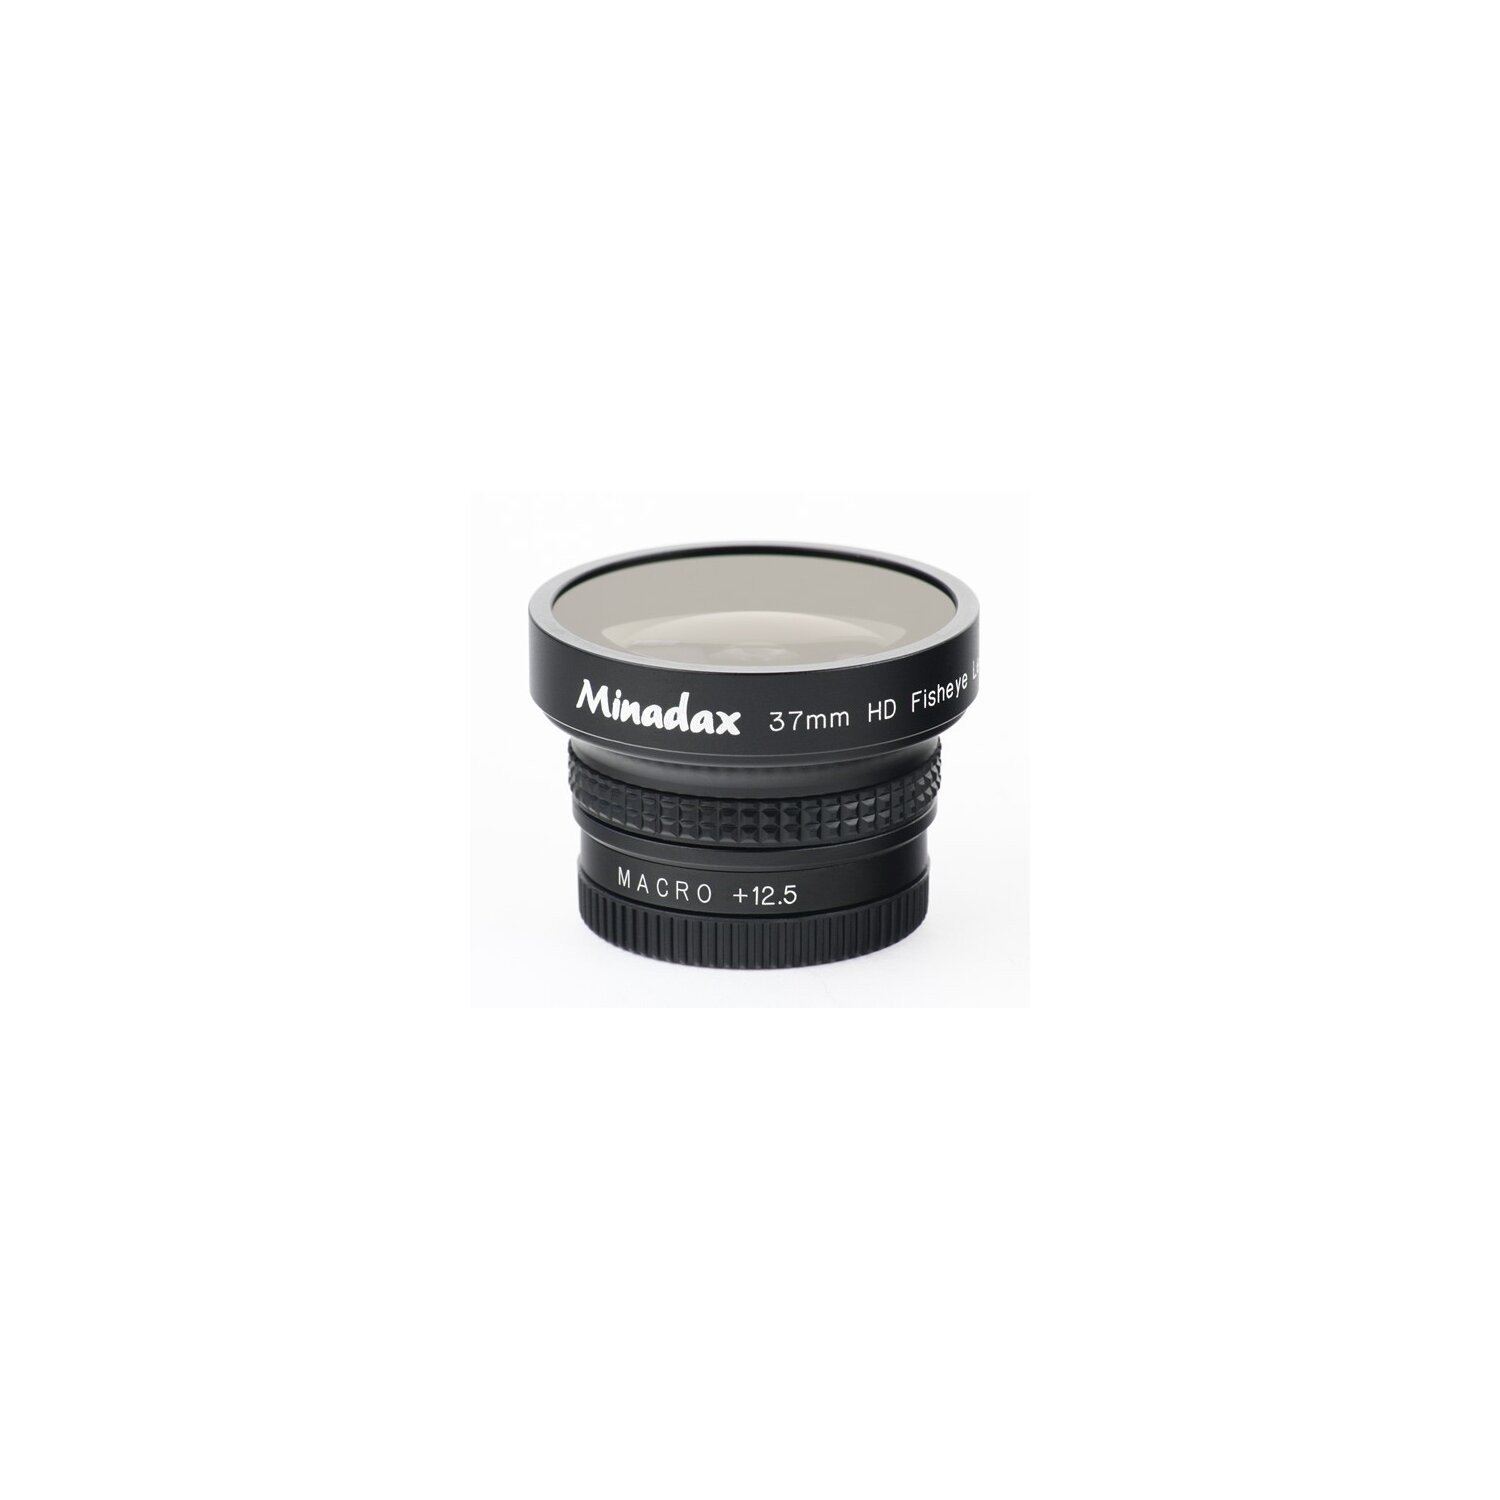 Minadax 0.42x Fisheye Vorsatz kompatibel mit Nikon Coolpix 880, 885, 4300 - 37mm